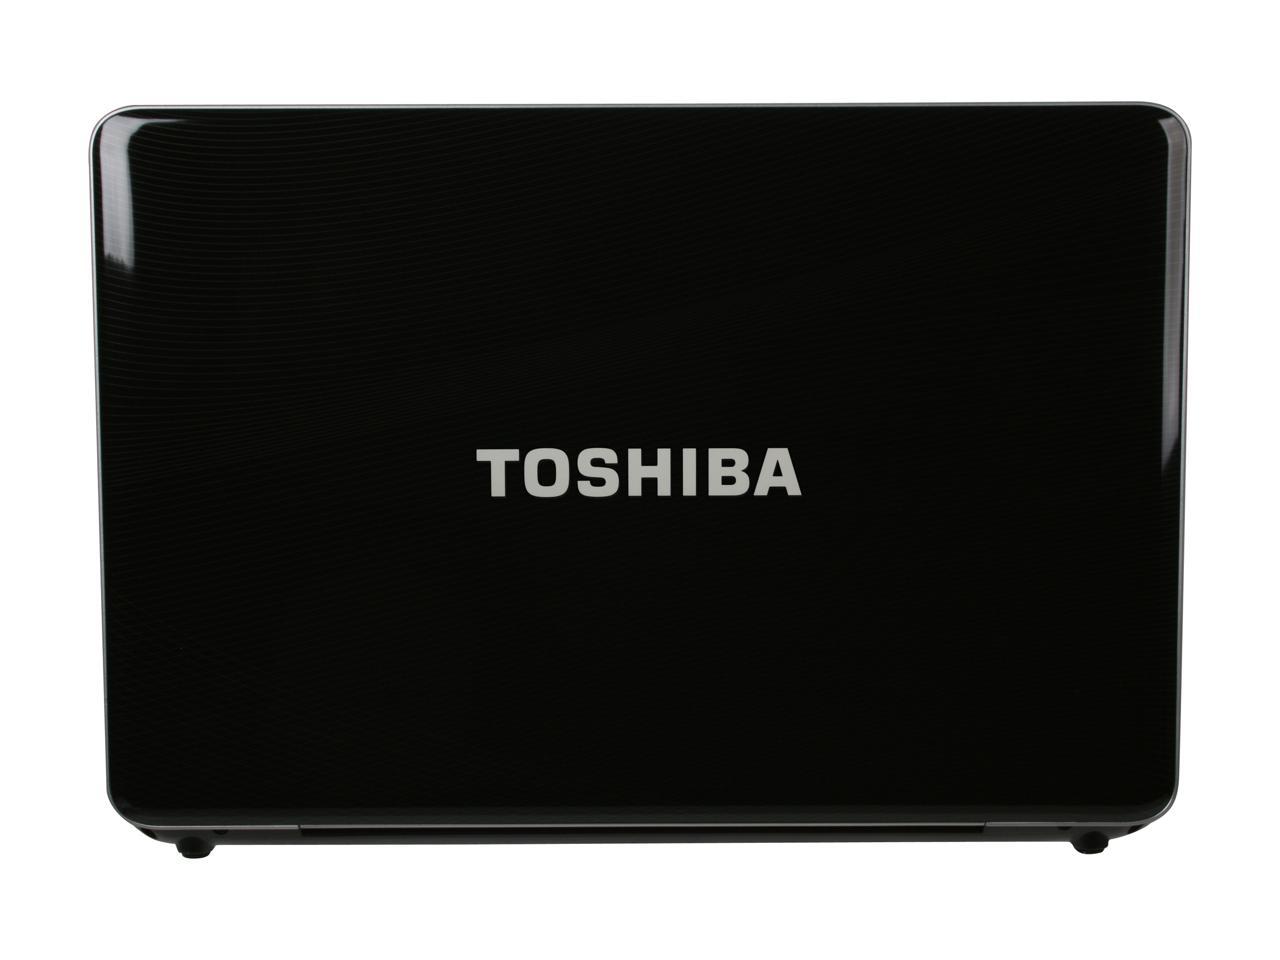 TOSHIBA Laptop Satellite A505-S6985 Intel Core 2 Duo T6600 